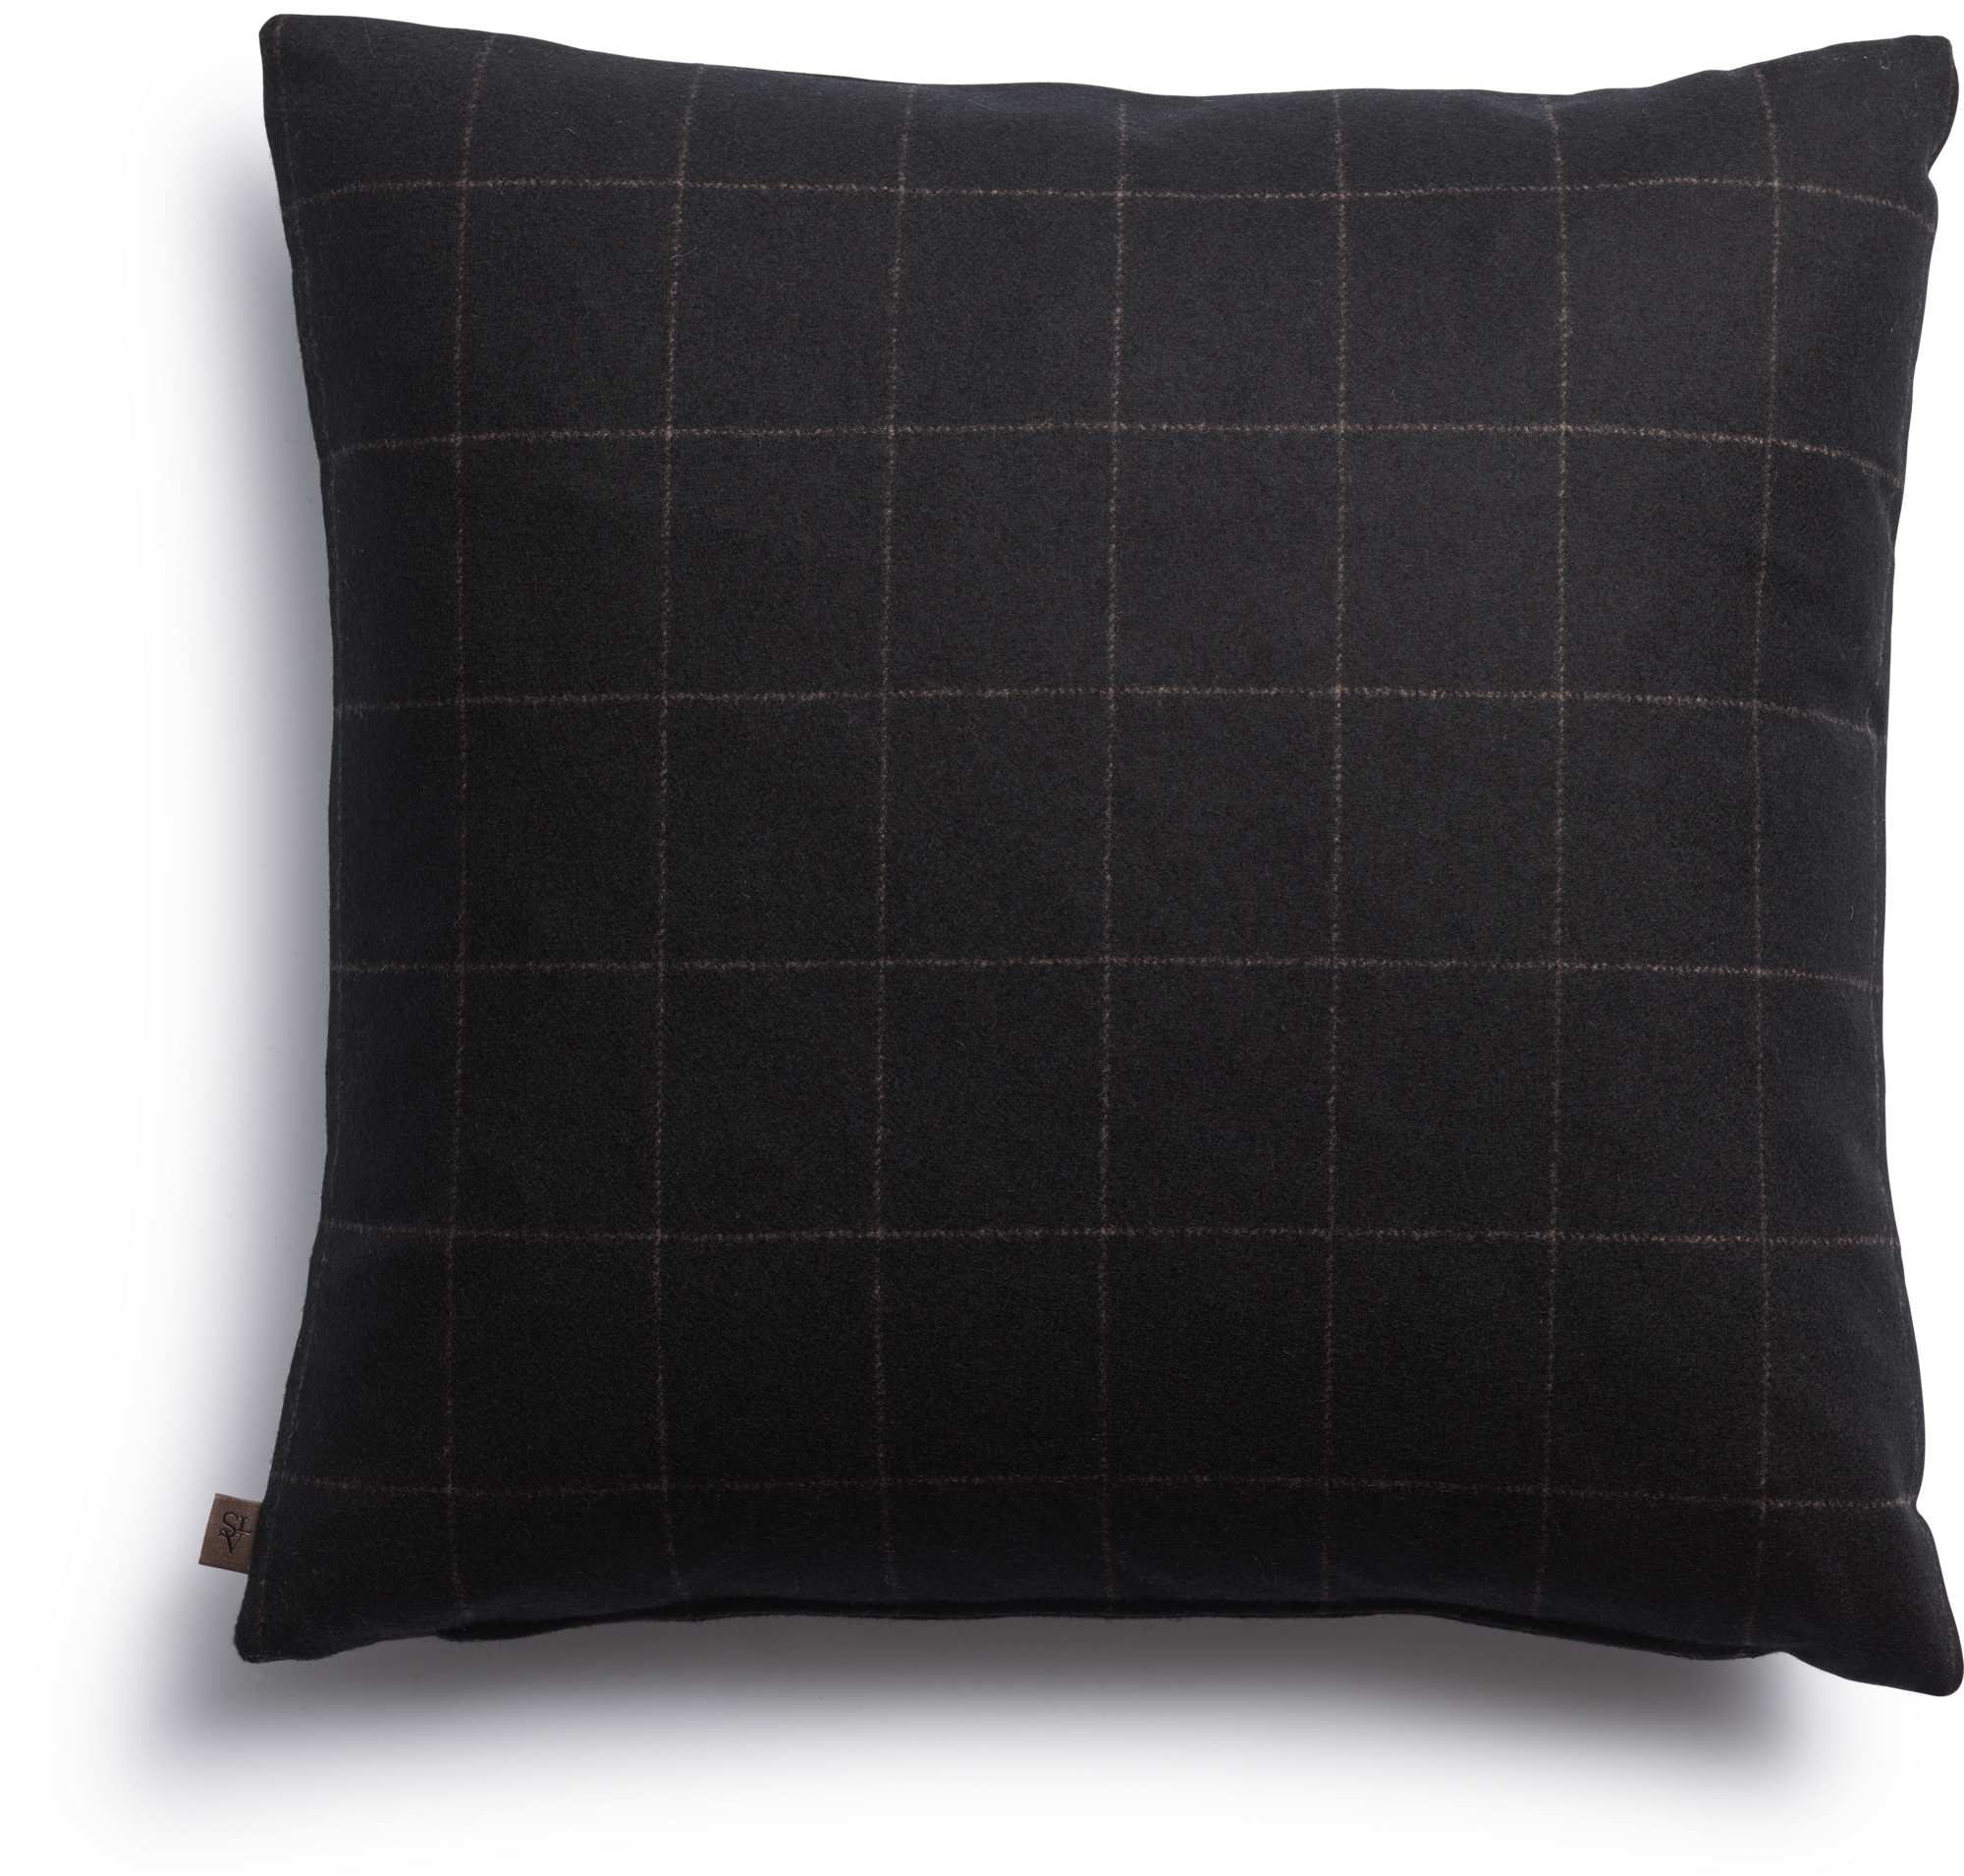 Duke decorative pillow